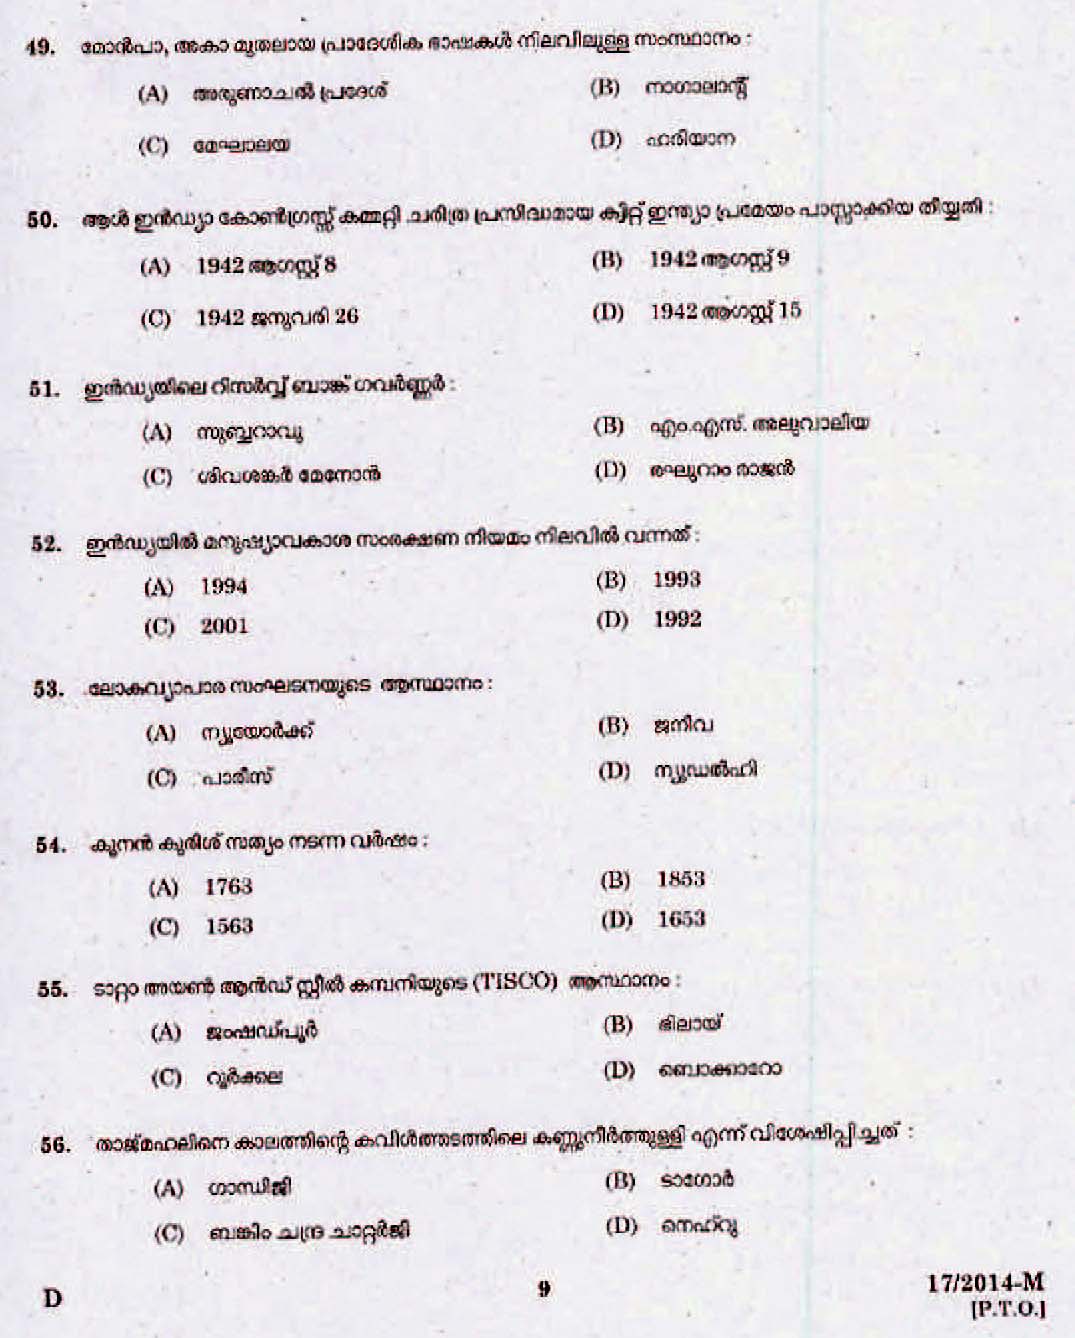 LD Clerk Palakkad Question Paper Malayalam 2014 Paper Code 172014 M 7